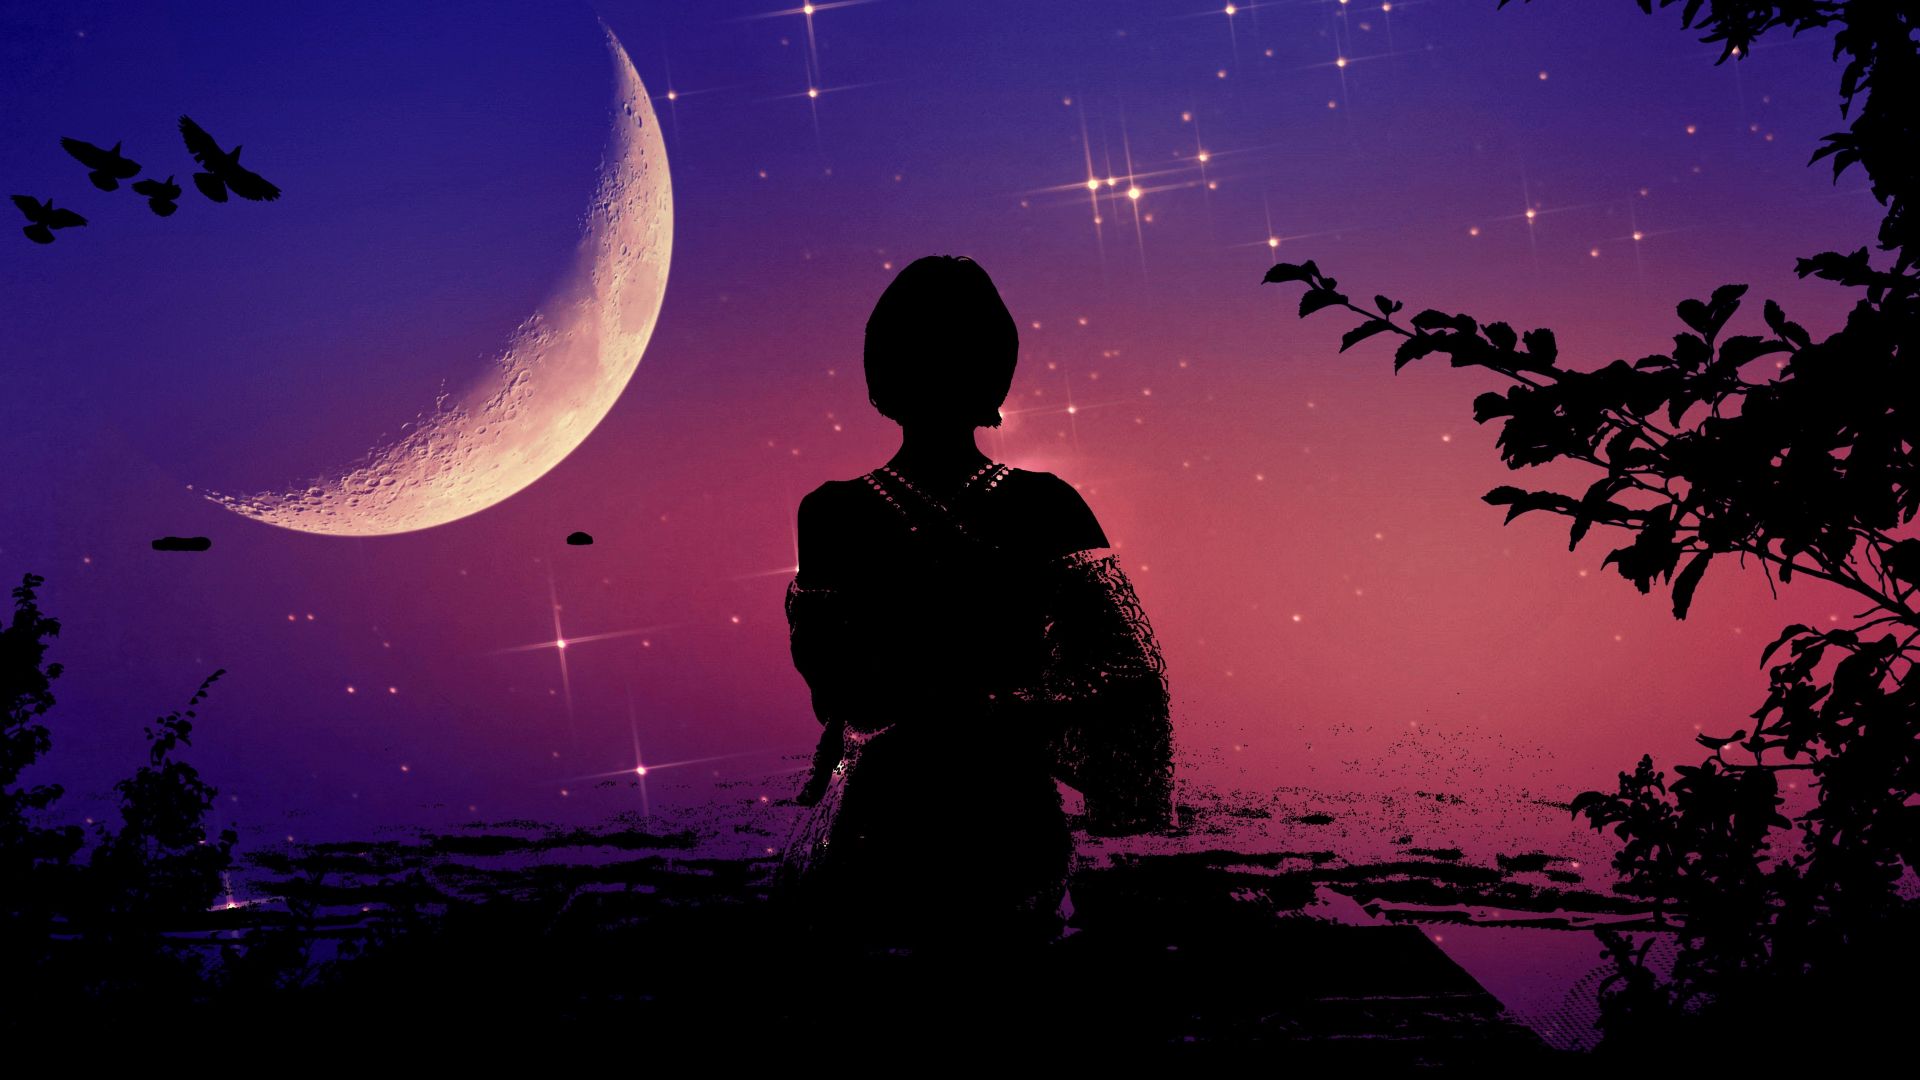 Night, moon, woman, digital art wallpaper, HD image, picture, background, 25718e